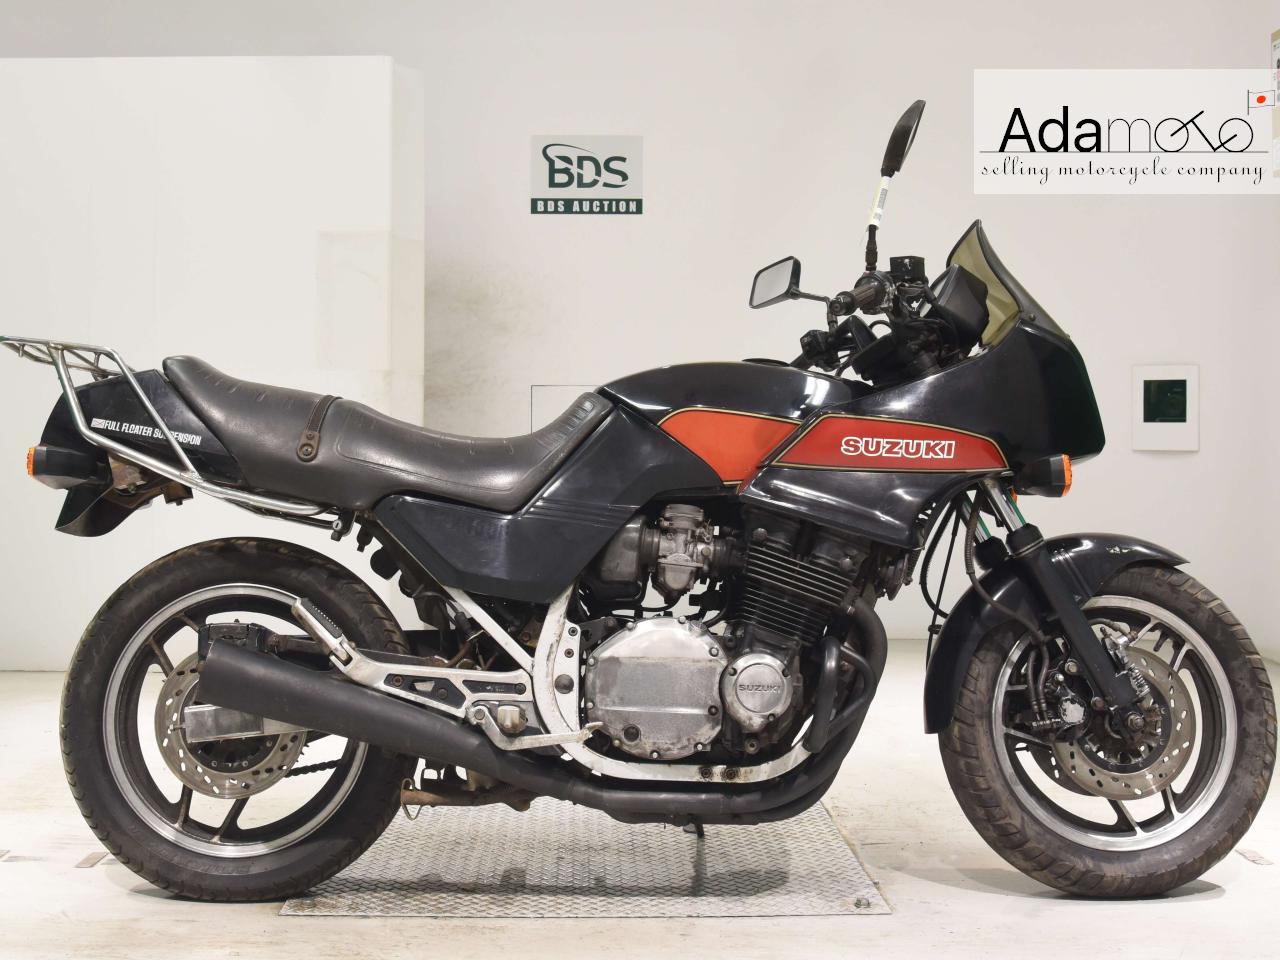 Suzuki GSX750E - Adamoto - Motorcycles from Japan